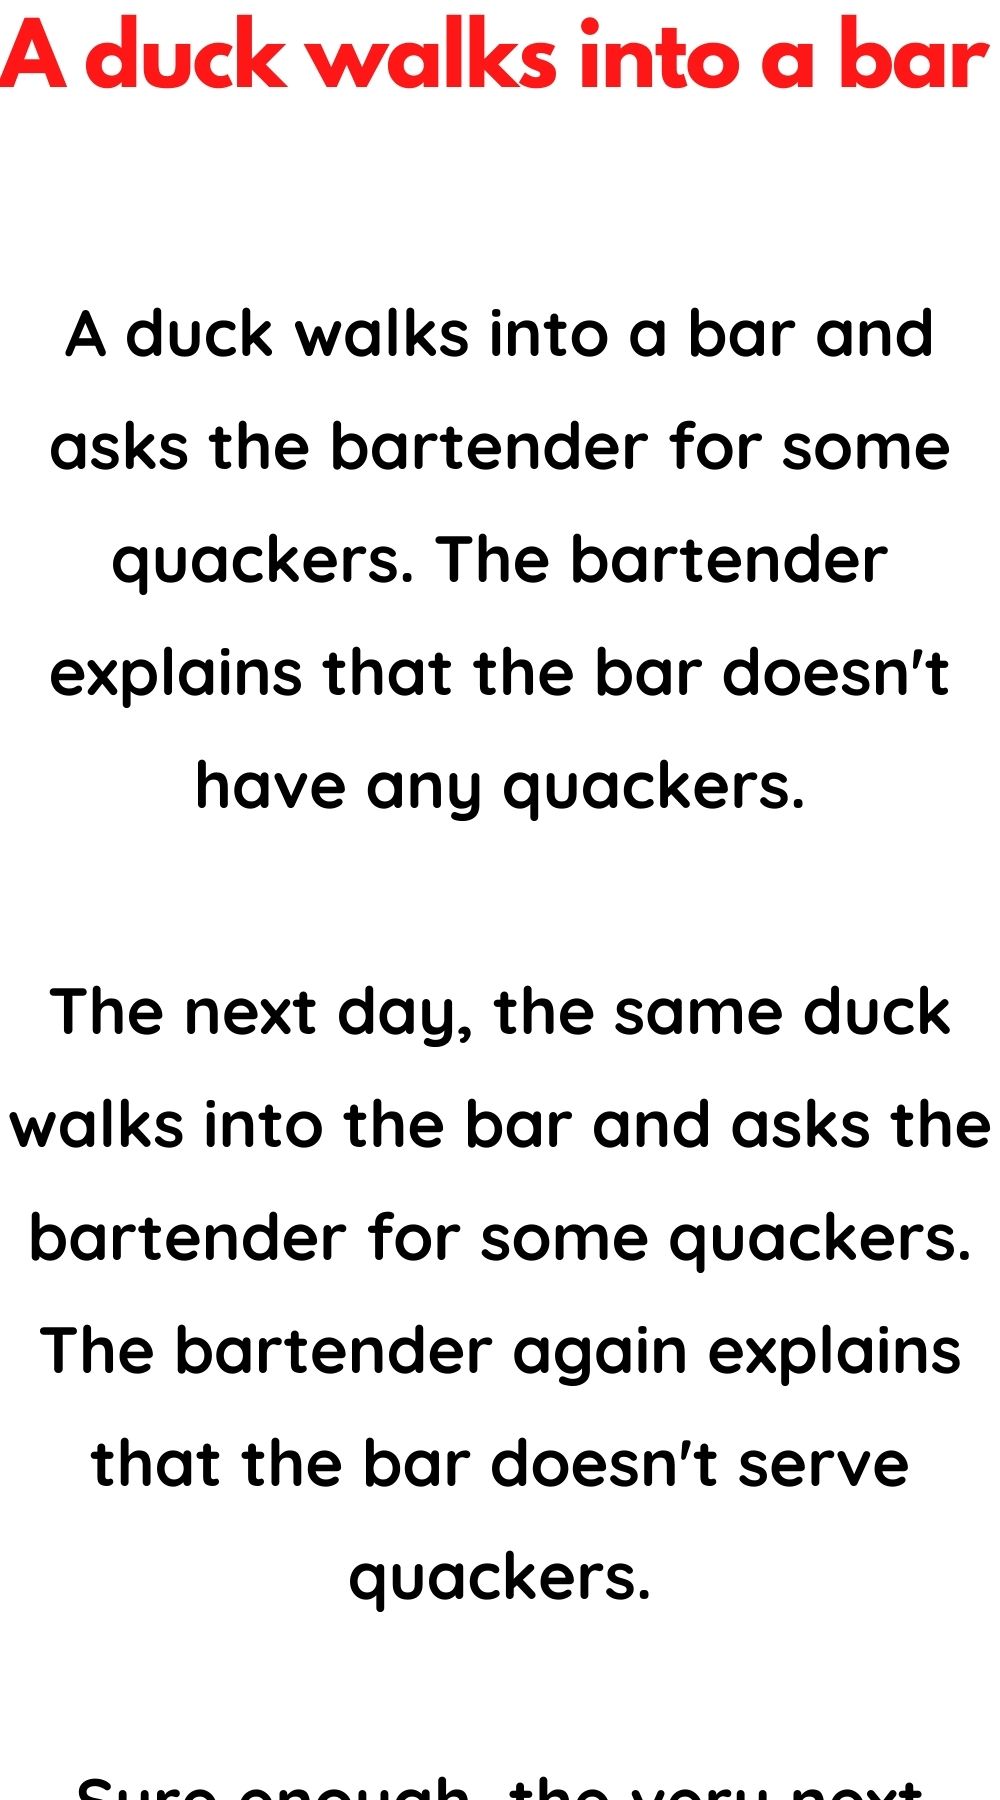 A duck walks into a bar